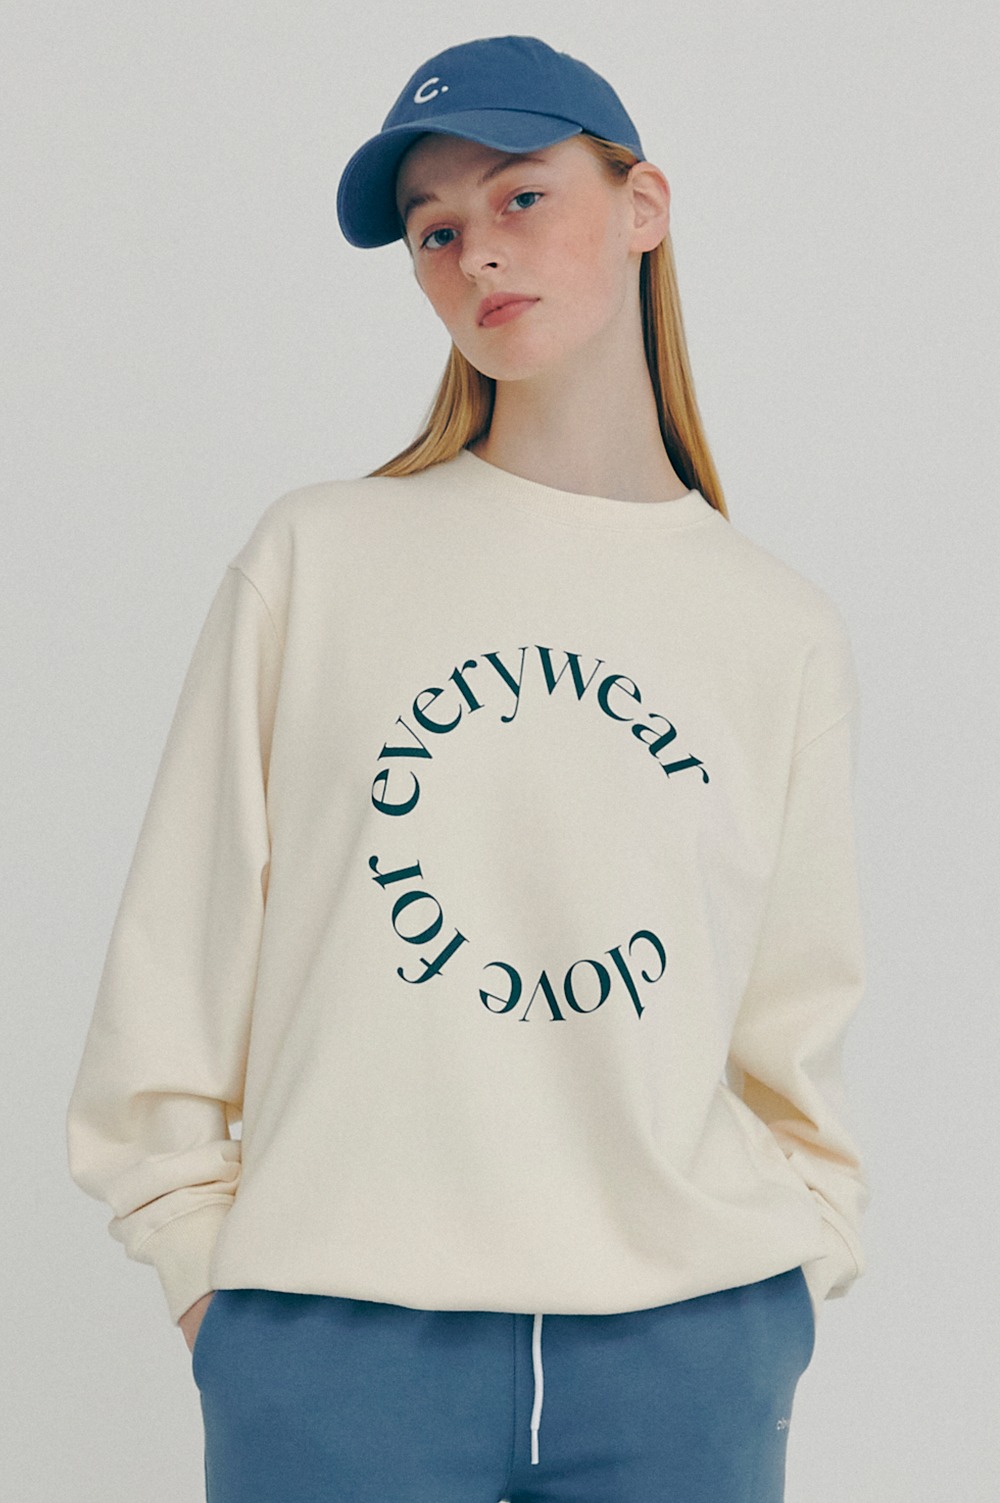 clove - [FW21 clove] Everywear Sweatshirt (Ivory)